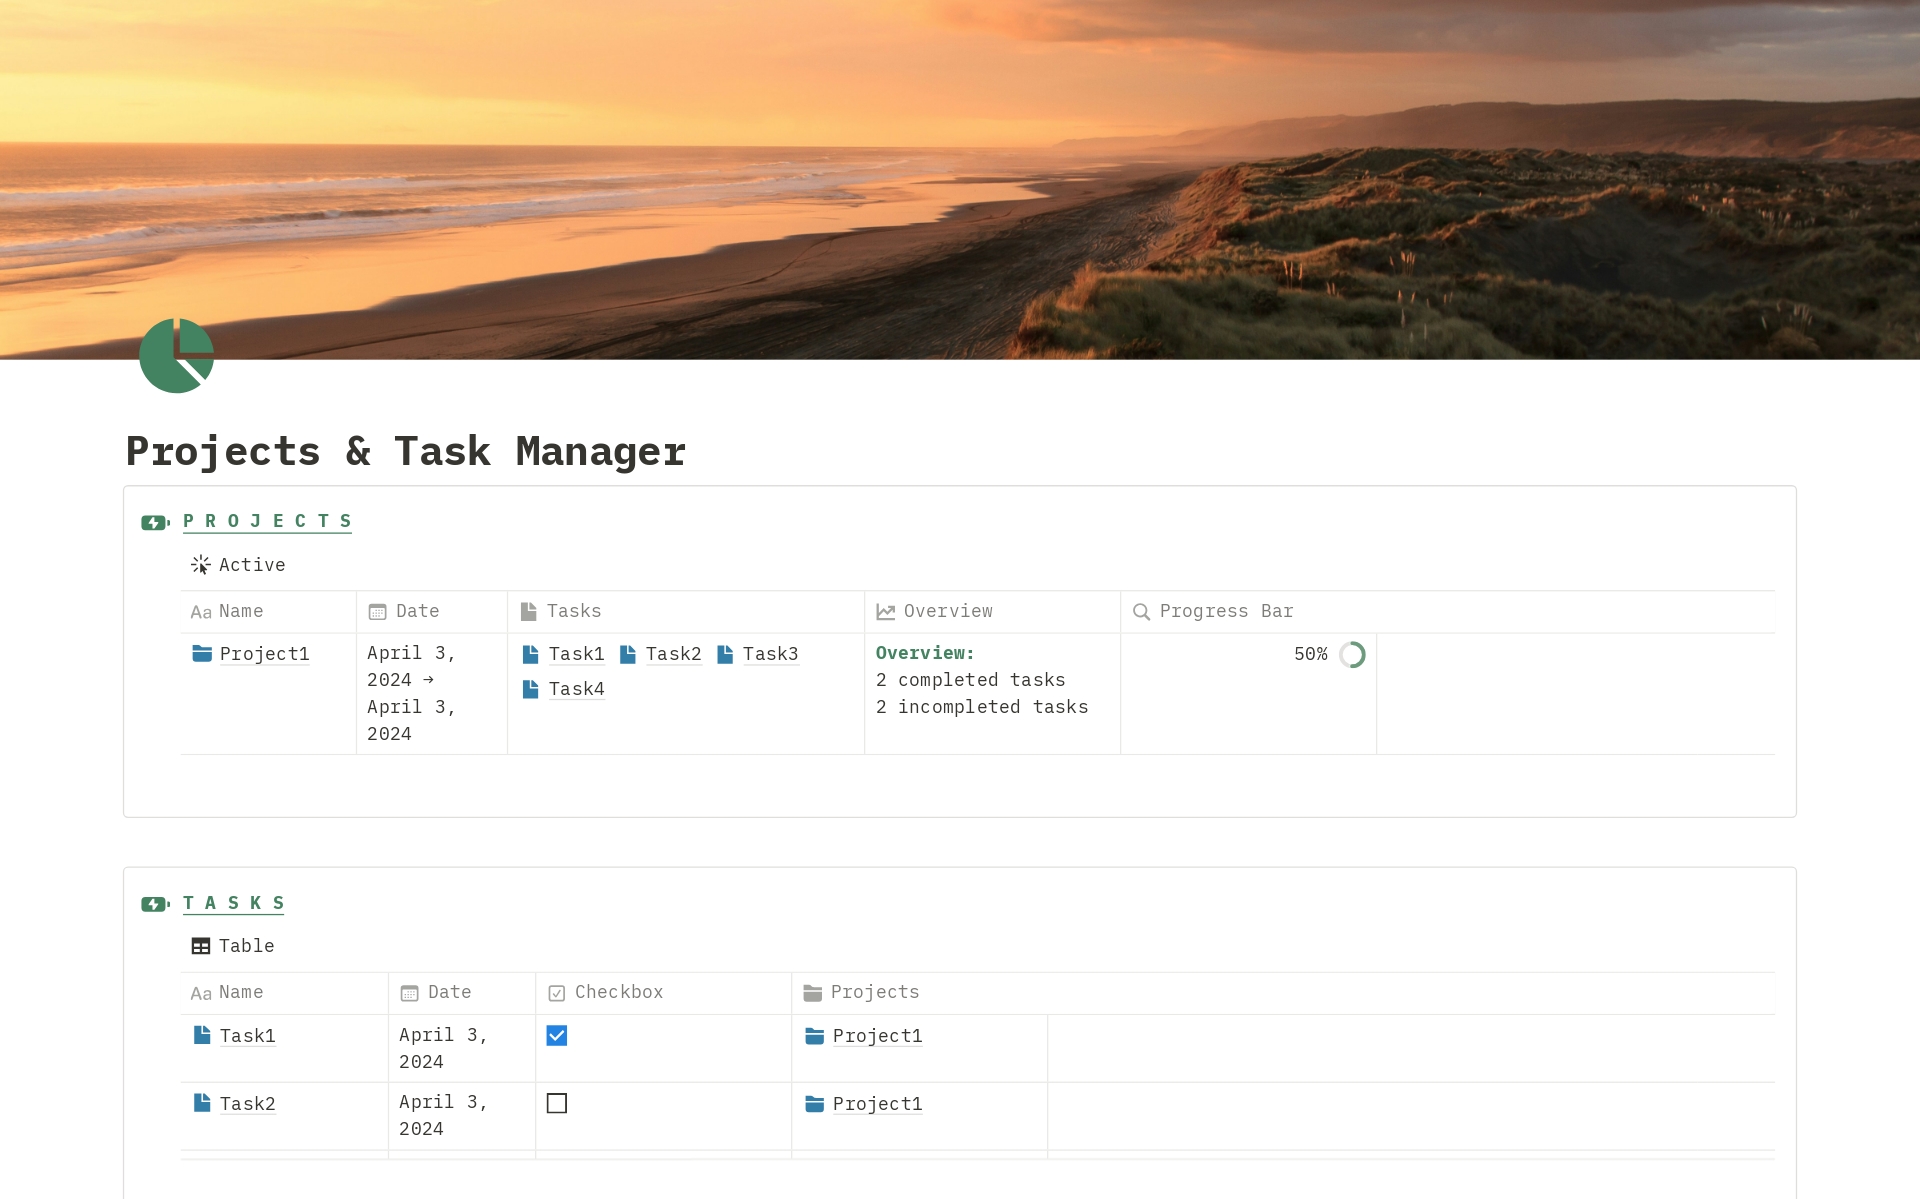 Projects & Tasks Manager - Dark Modeのテンプレートのプレビュー